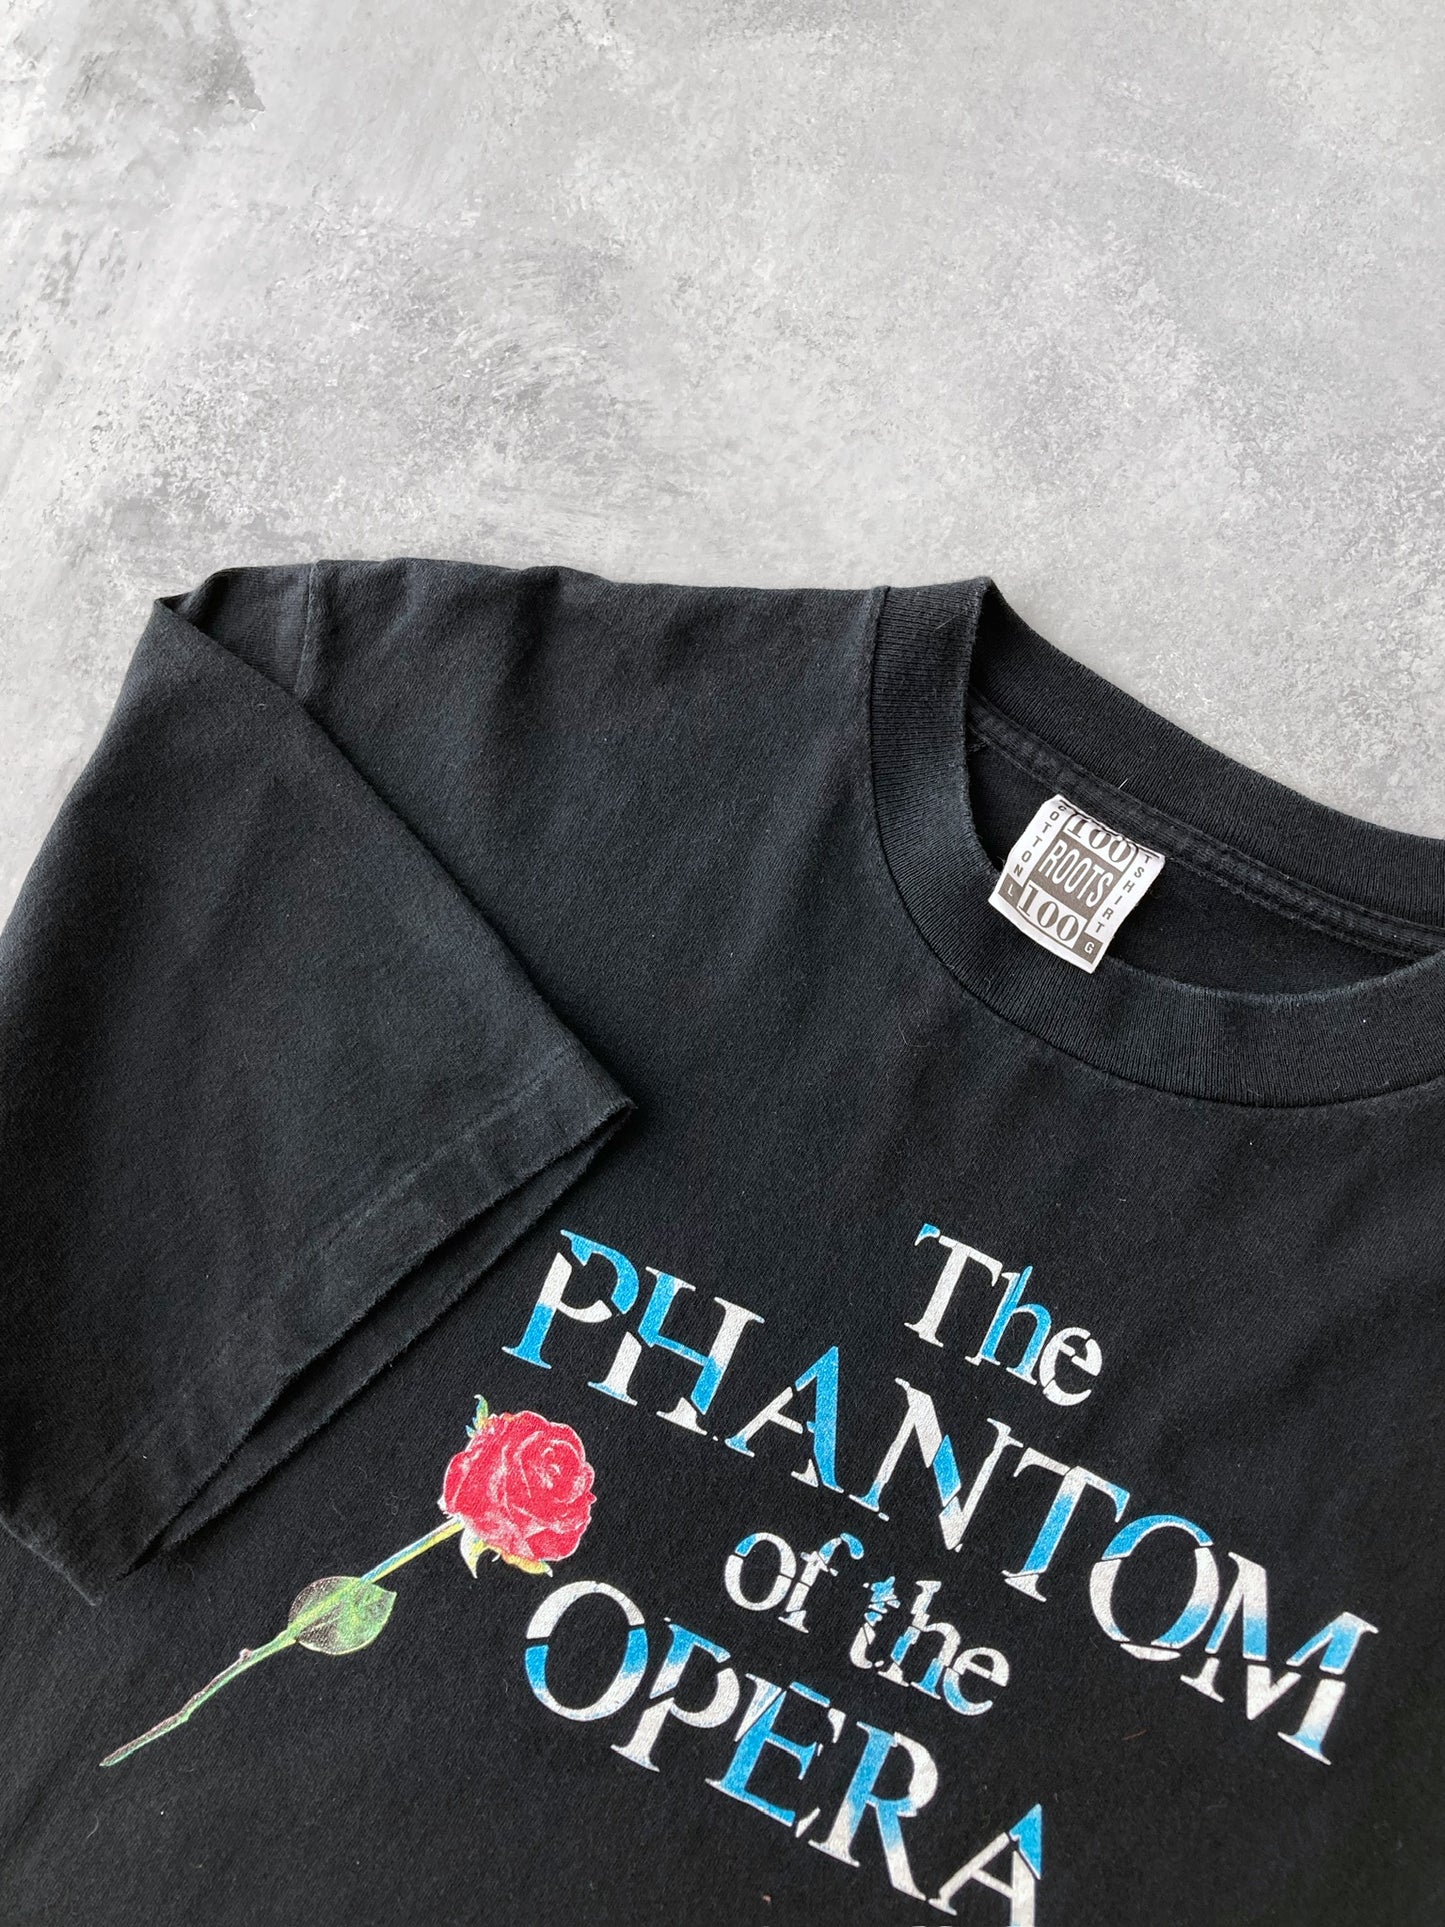 The Phantom of the Opera T-Shirt 90's - Large